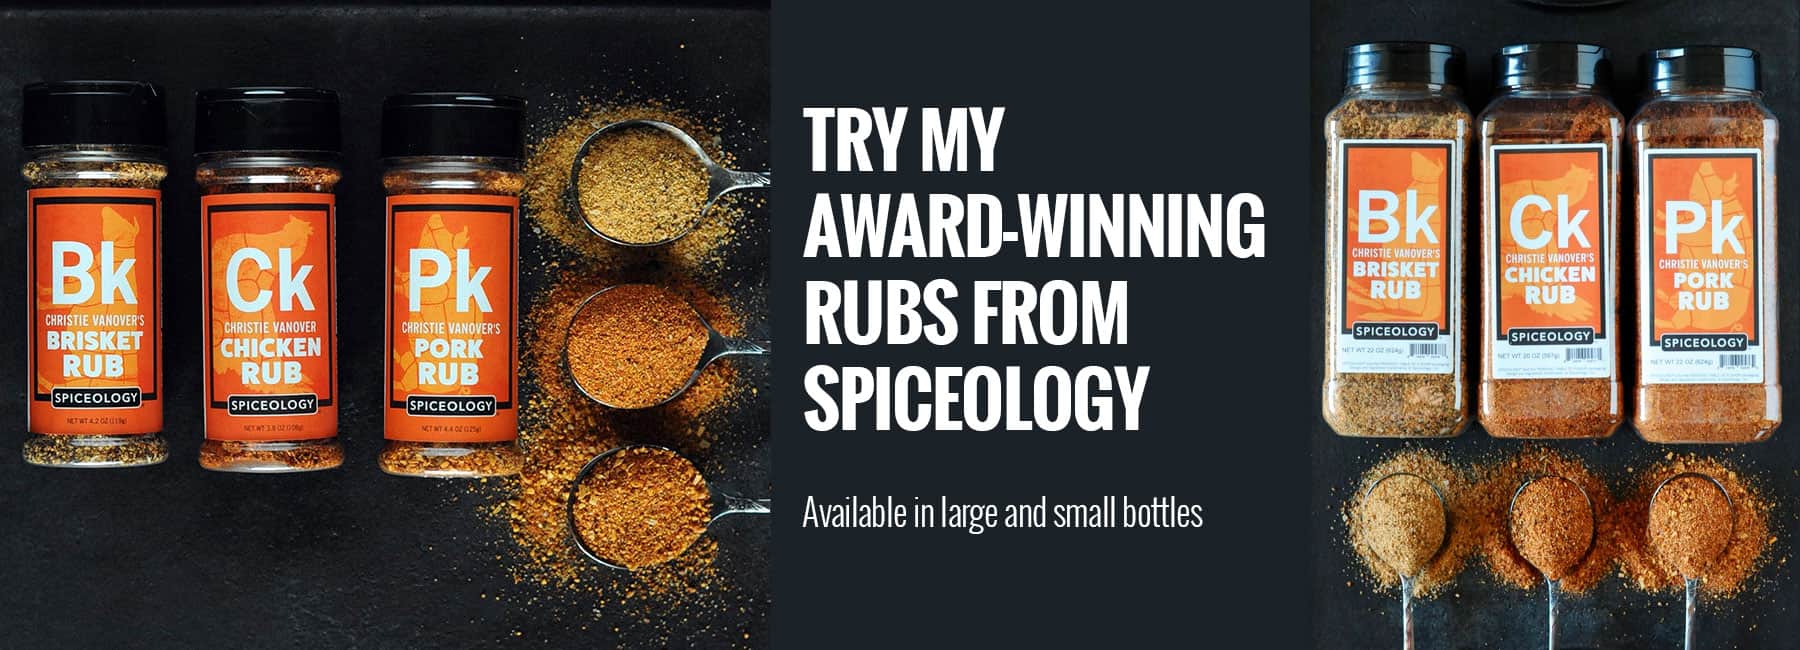 bottles of spiceology rubs